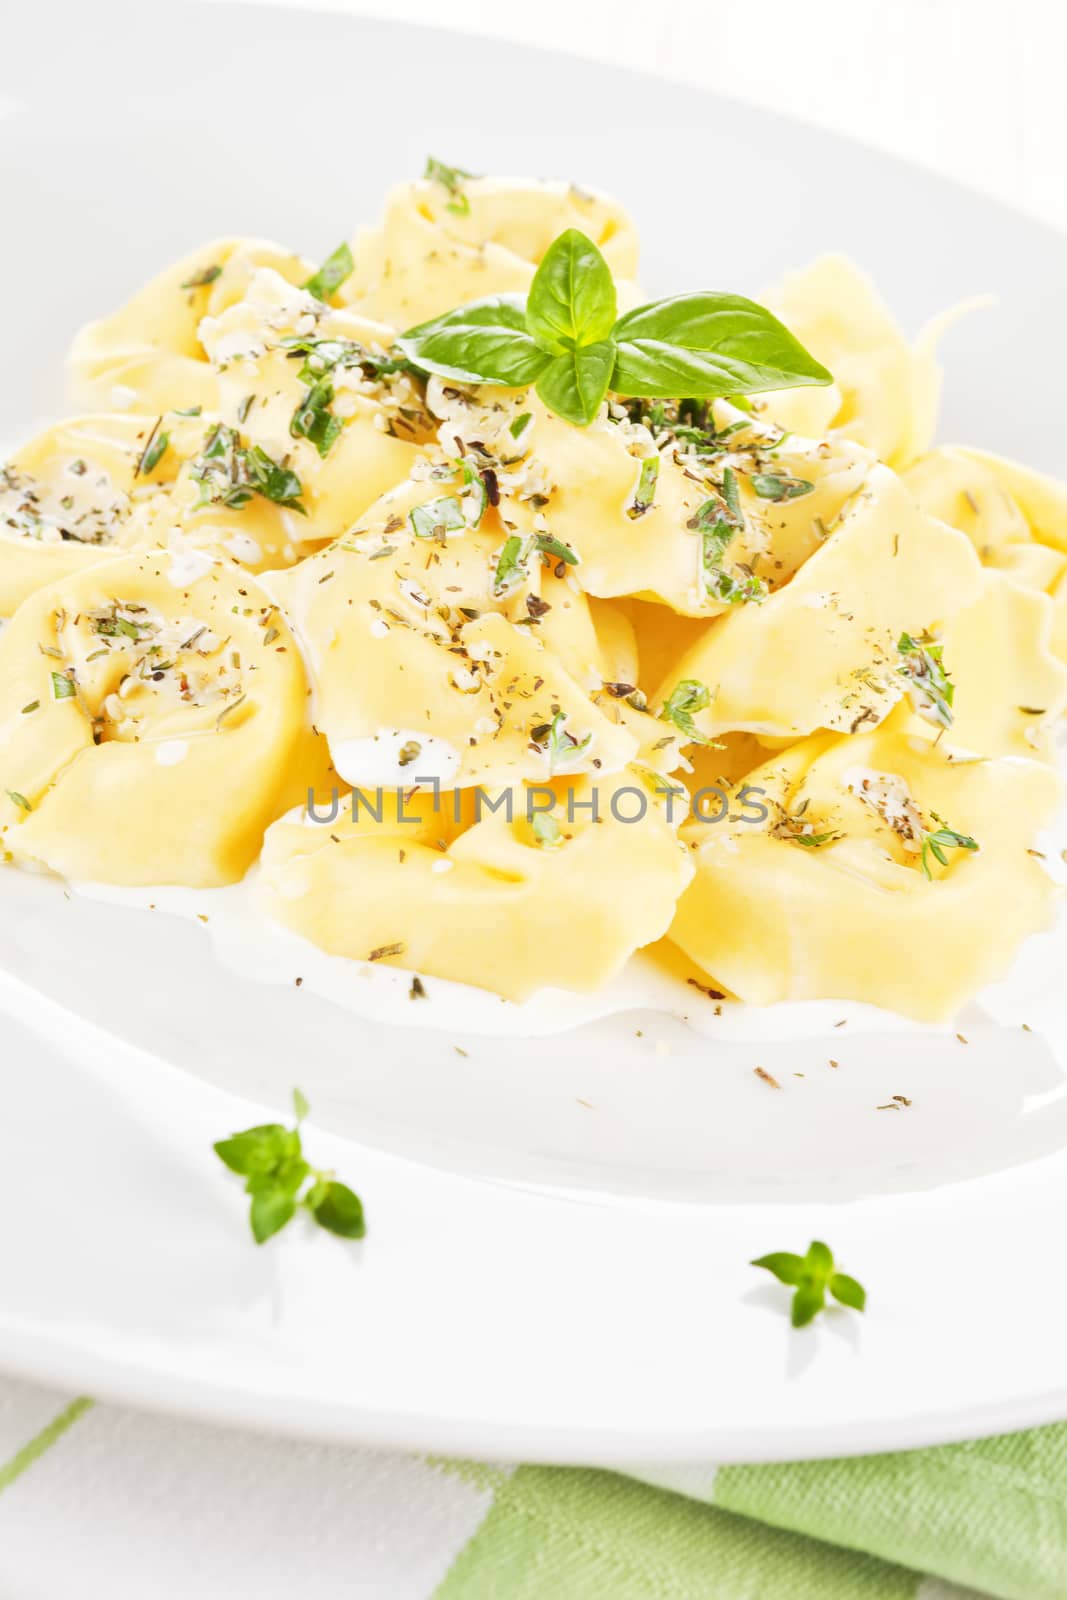 Tortellini with cream sauce. by eskymaks